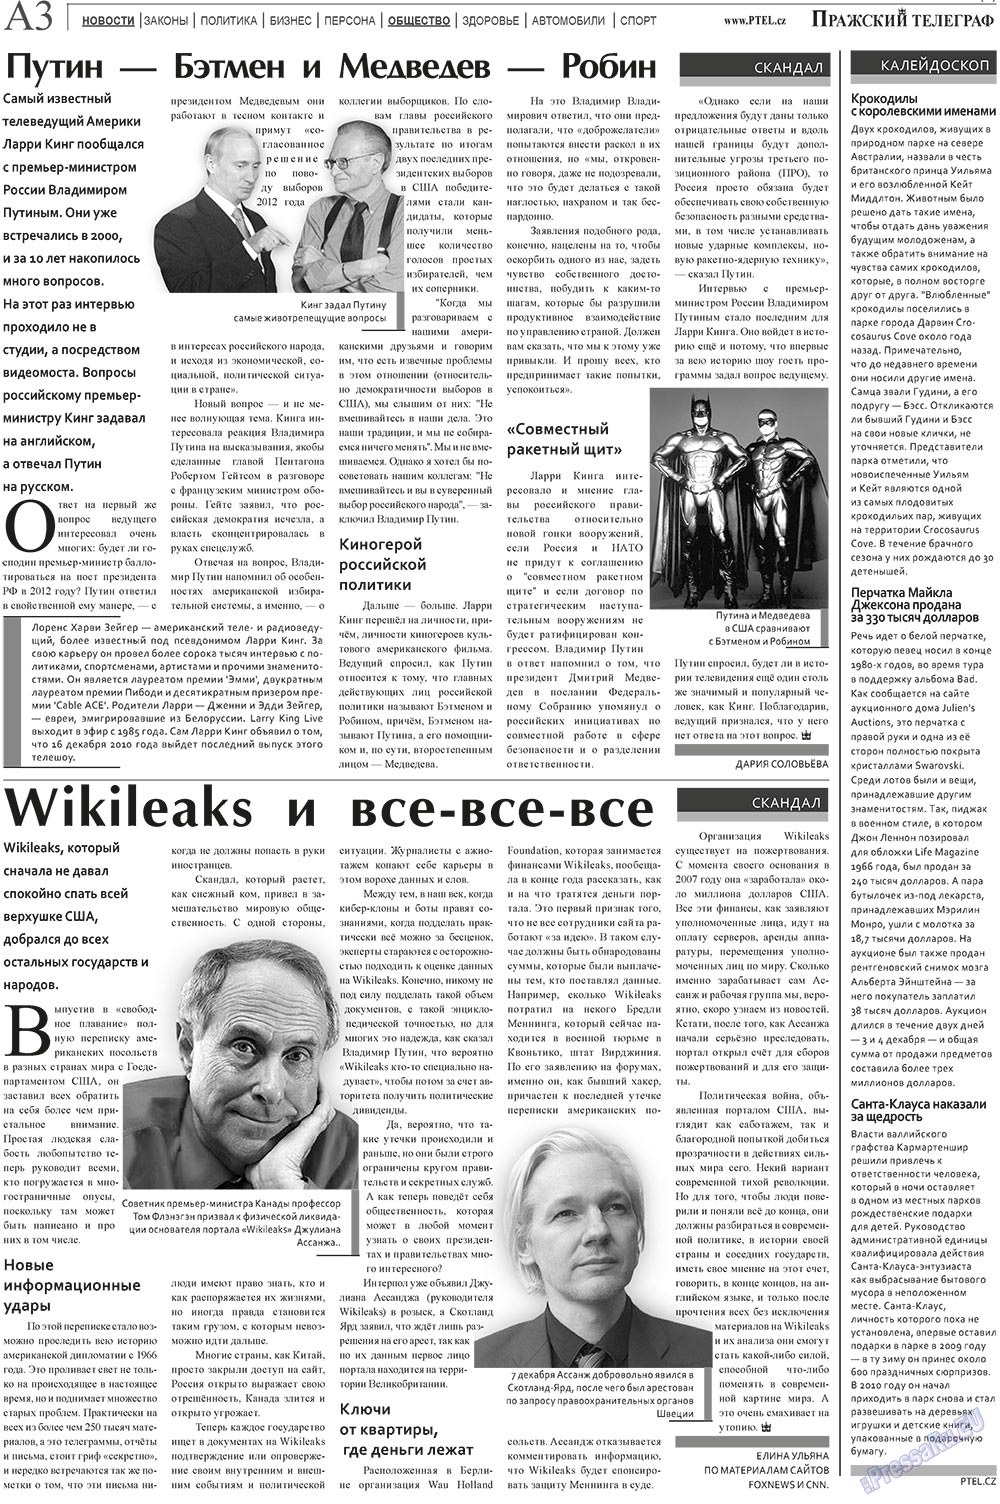 Пражский телеграф, газета. 2010 №49 стр.3